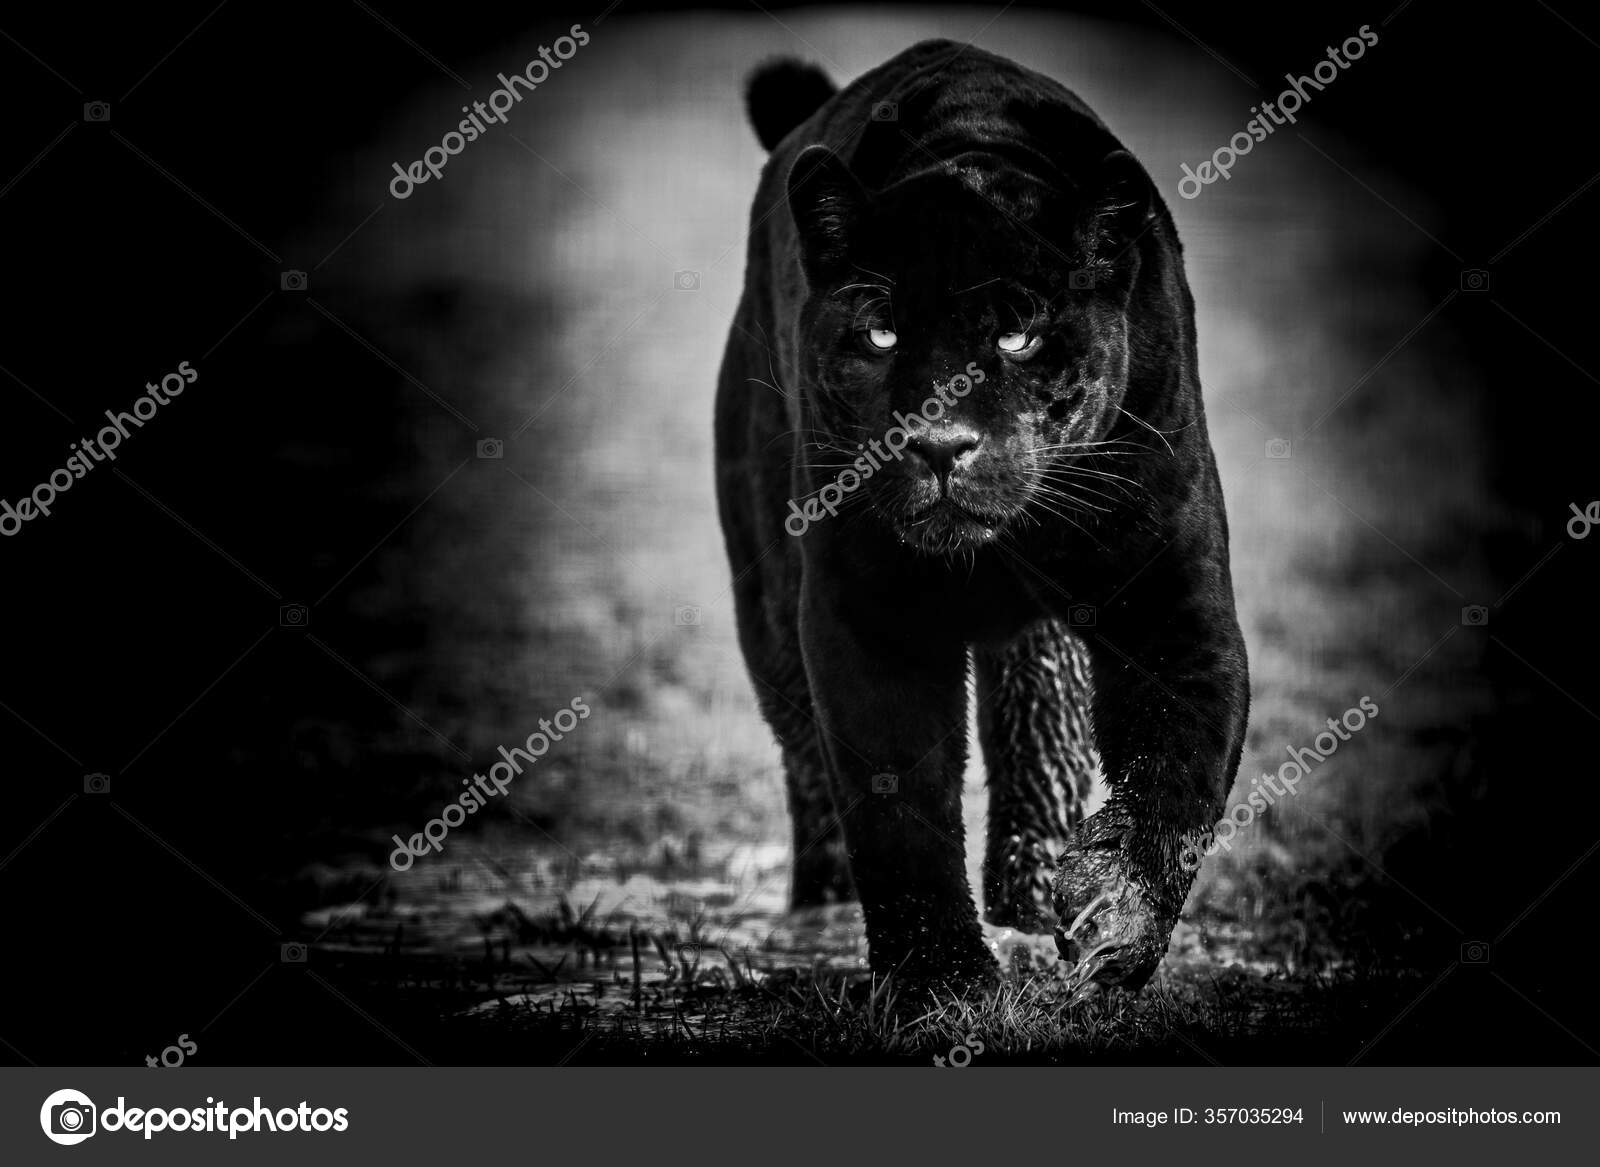 5900 Black Jaguar Stock Photos Pictures  RoyaltyFree Images  iStock   Black panther Panther Black leopard